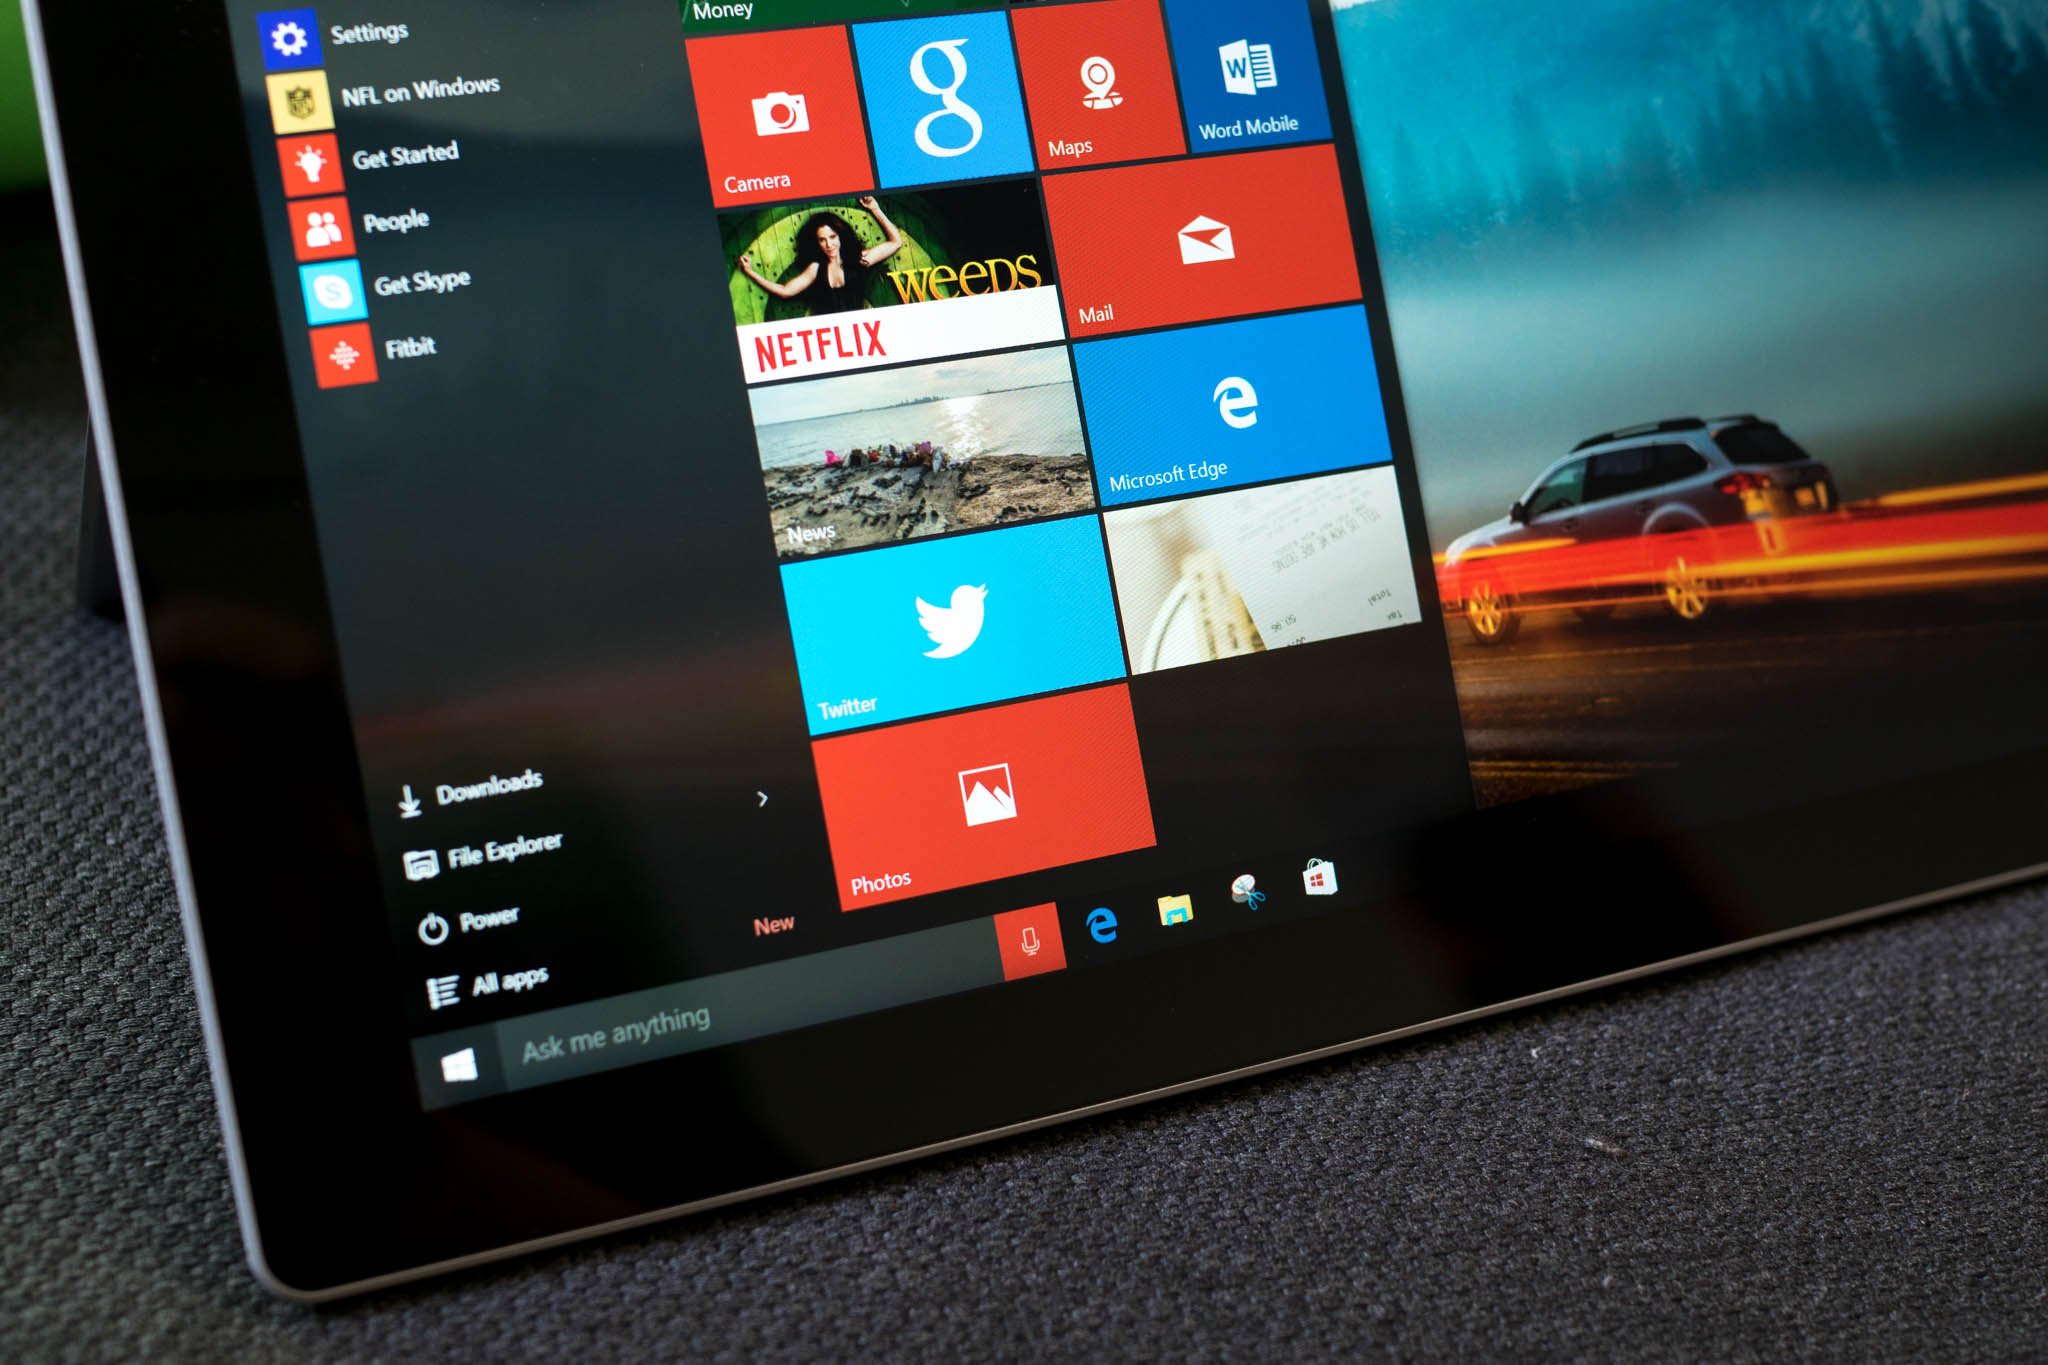 Microsoft releases new cumulative updates for Windows 10 Creators and Anniversary Update PCs